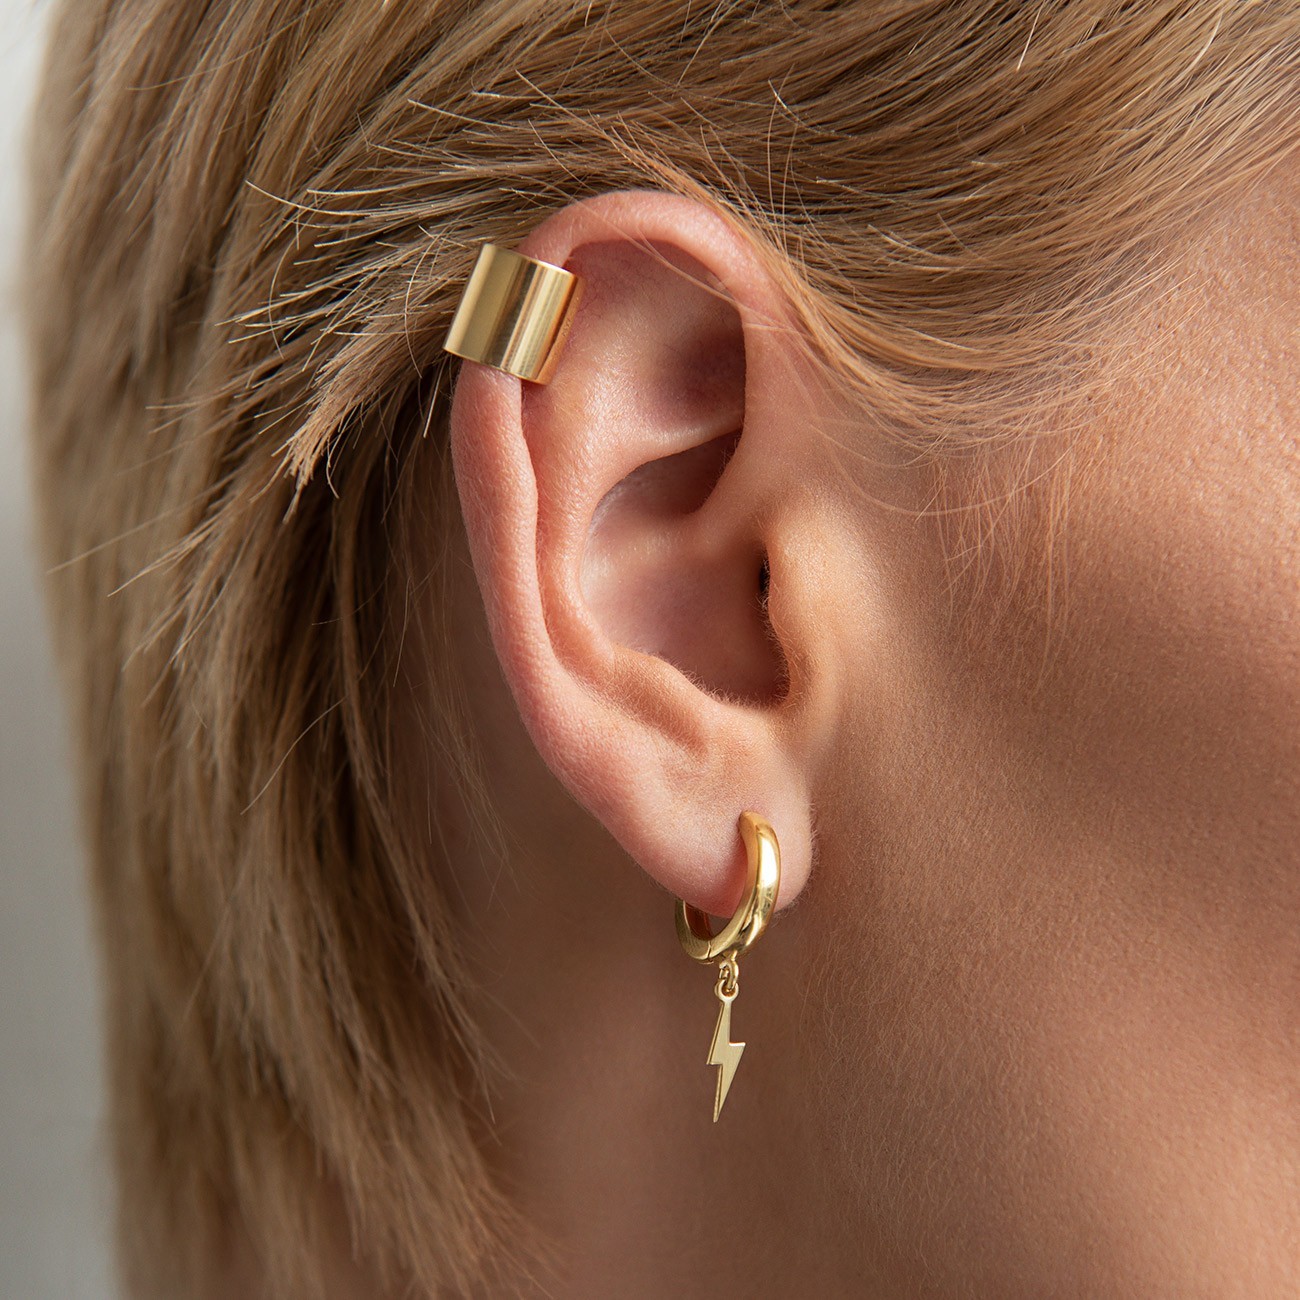 Chain earrings cone sterling silver 925